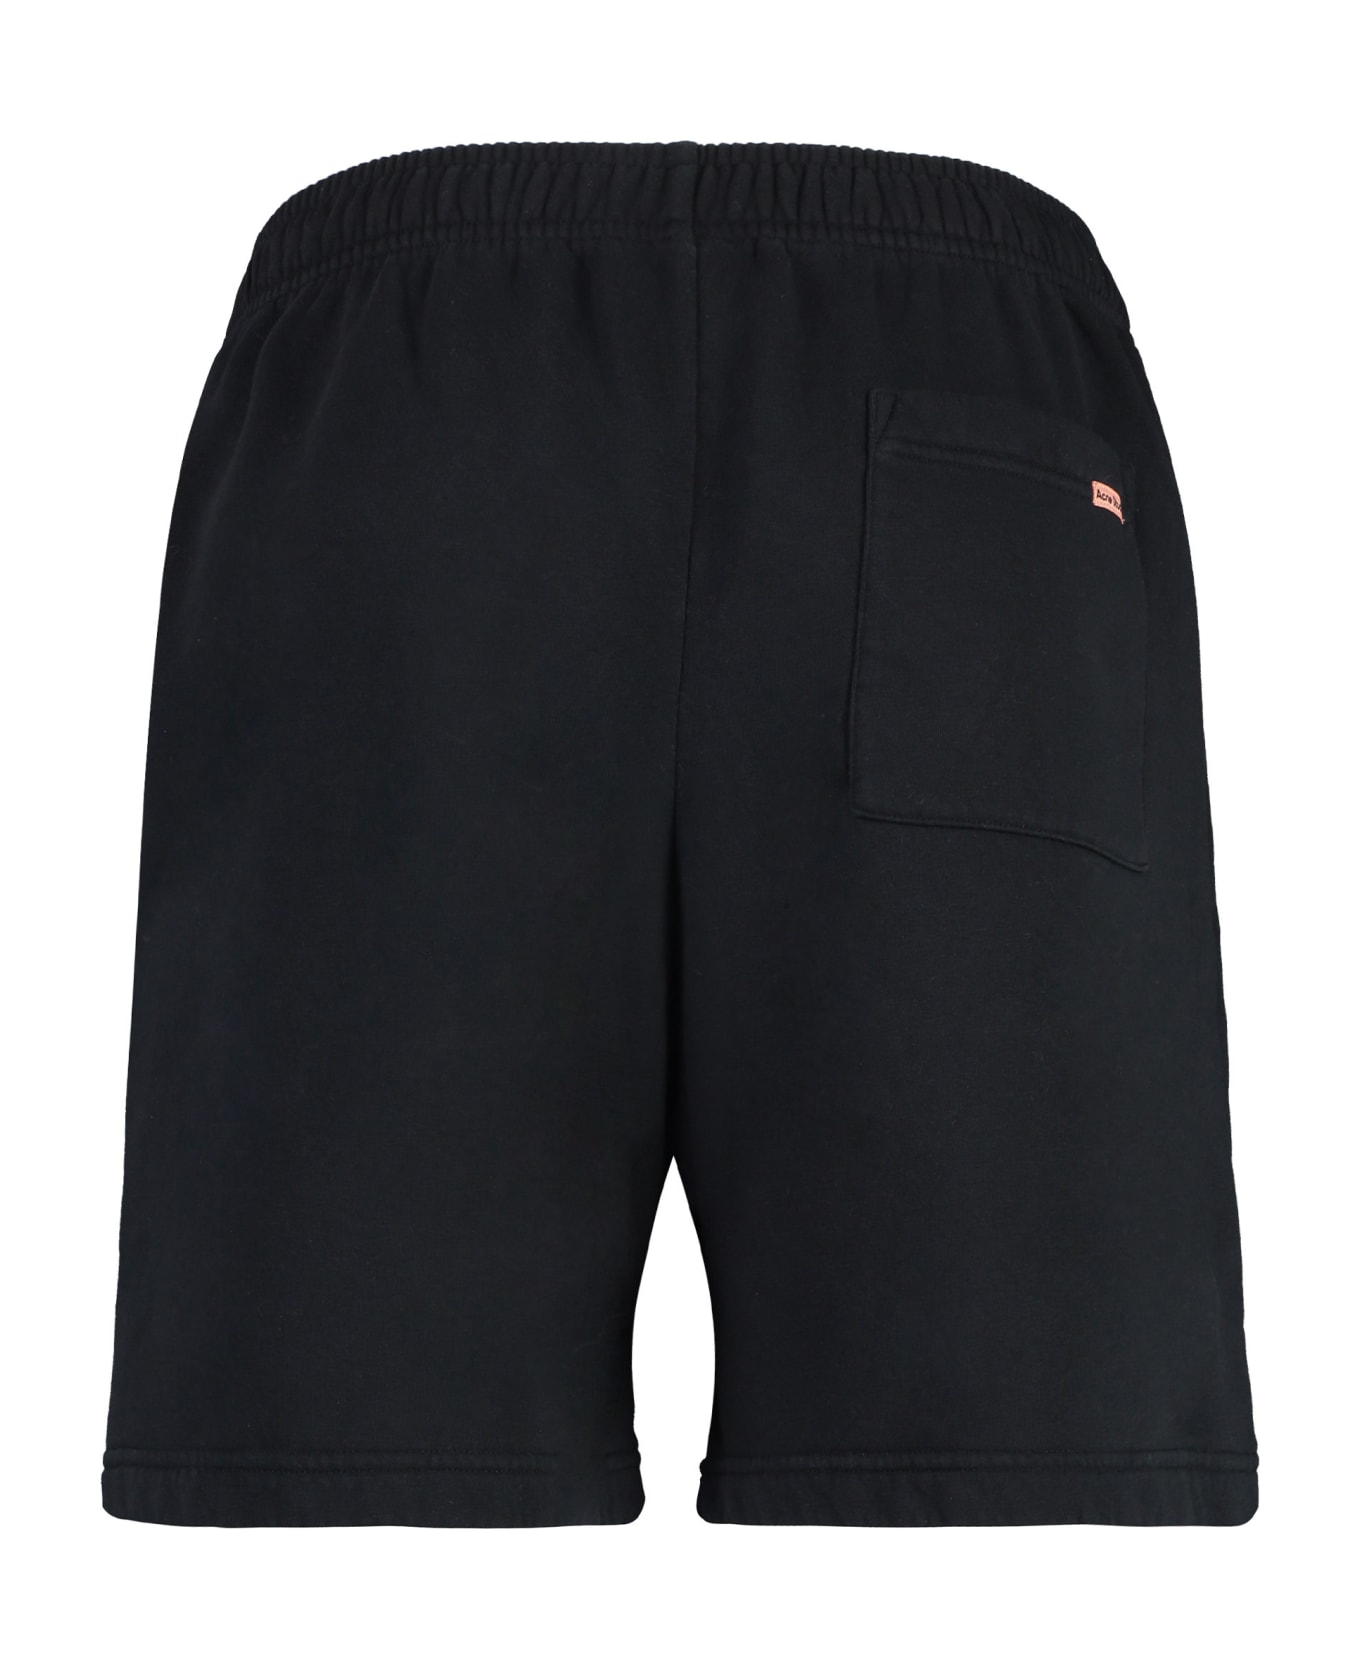 Acne Studios Cotton Bermuda Shorts - black